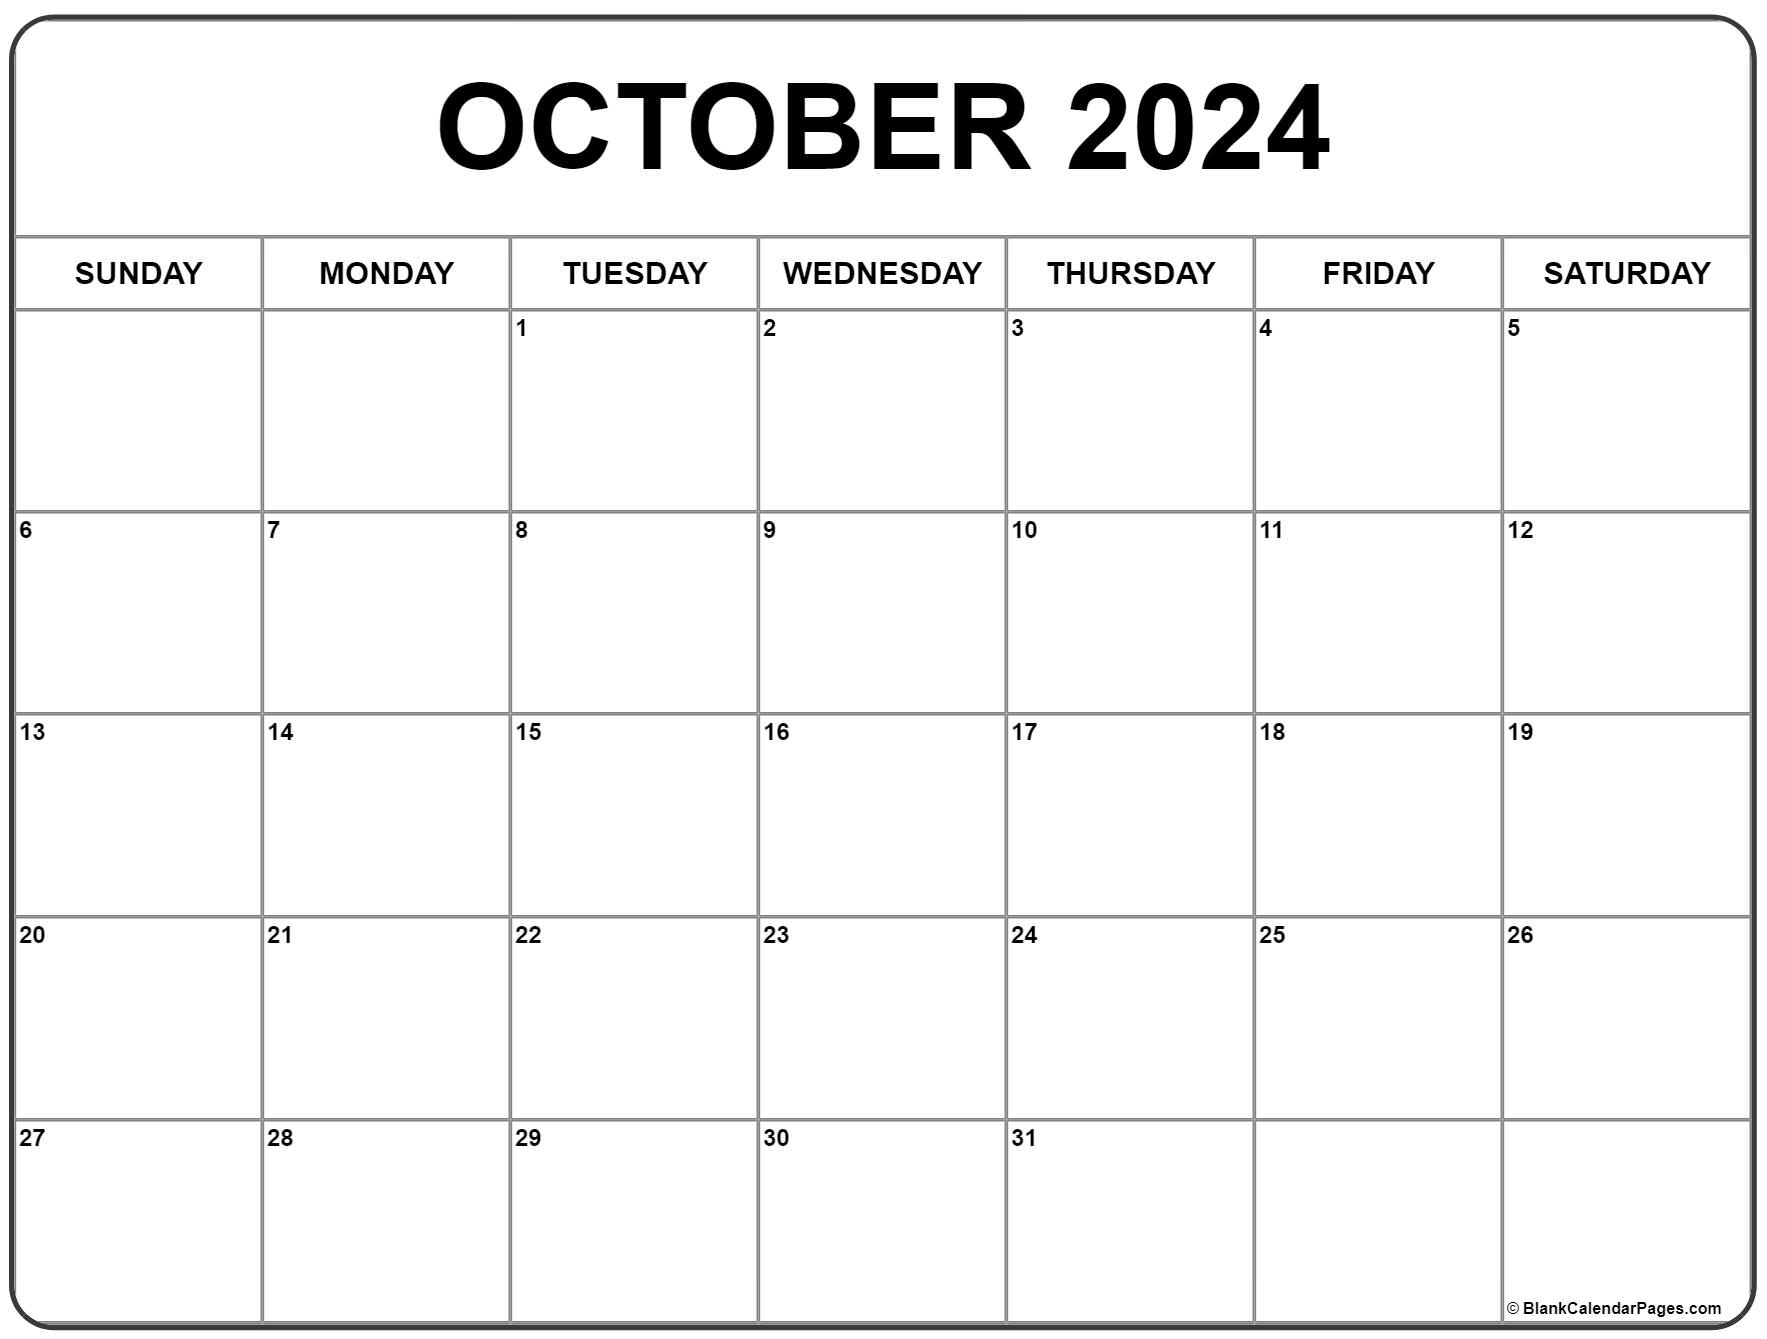 October 2024 Calendar | Free Printable Calendar for October 2024 Calendar Free Printable